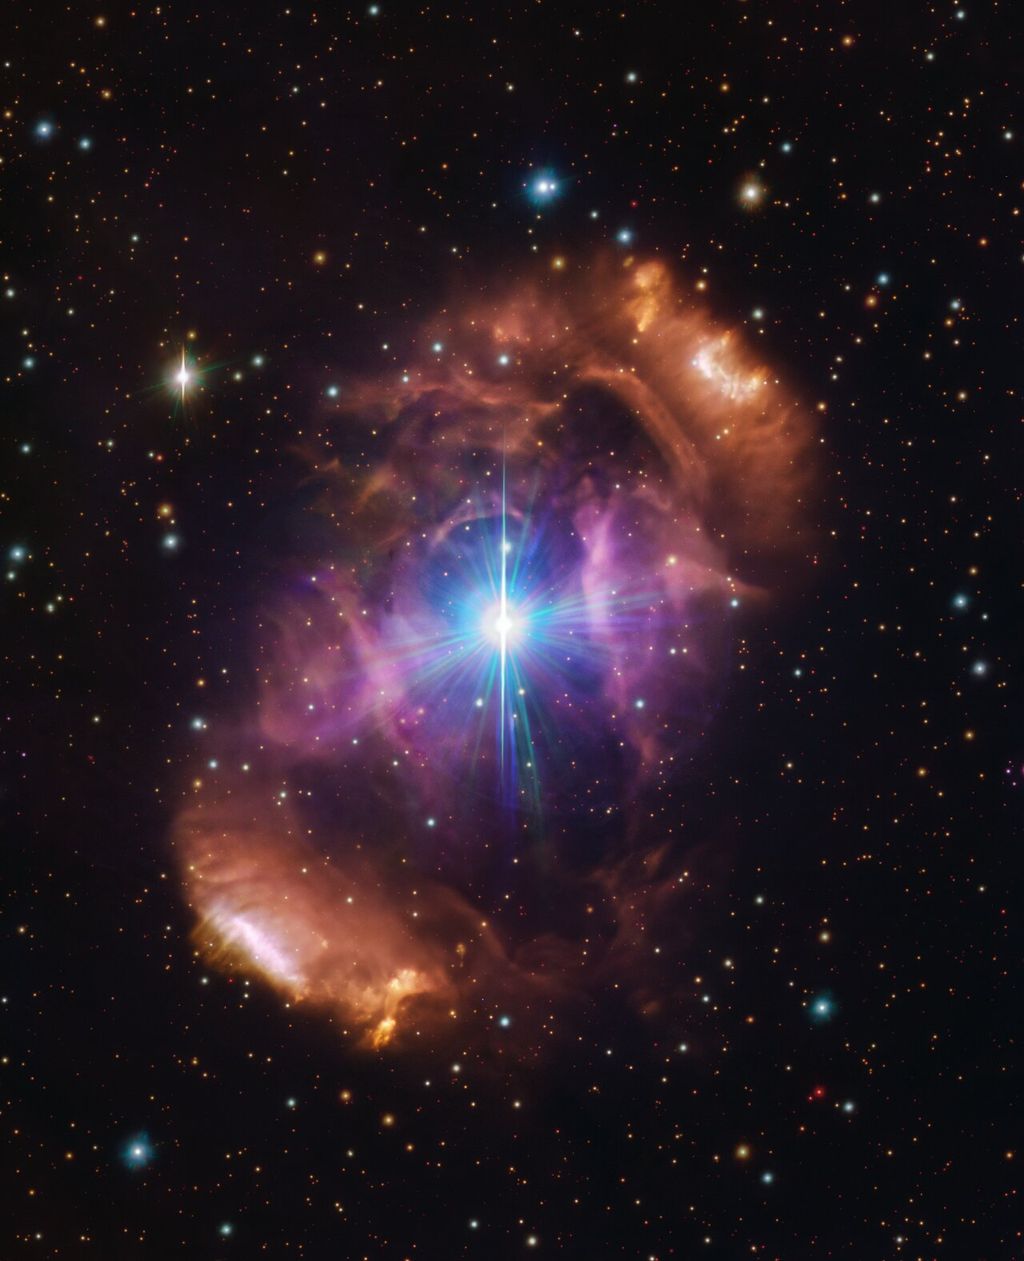 Monster star stellar merger 9hnrTd4gKCjHSXUVWWBpob-1024-80